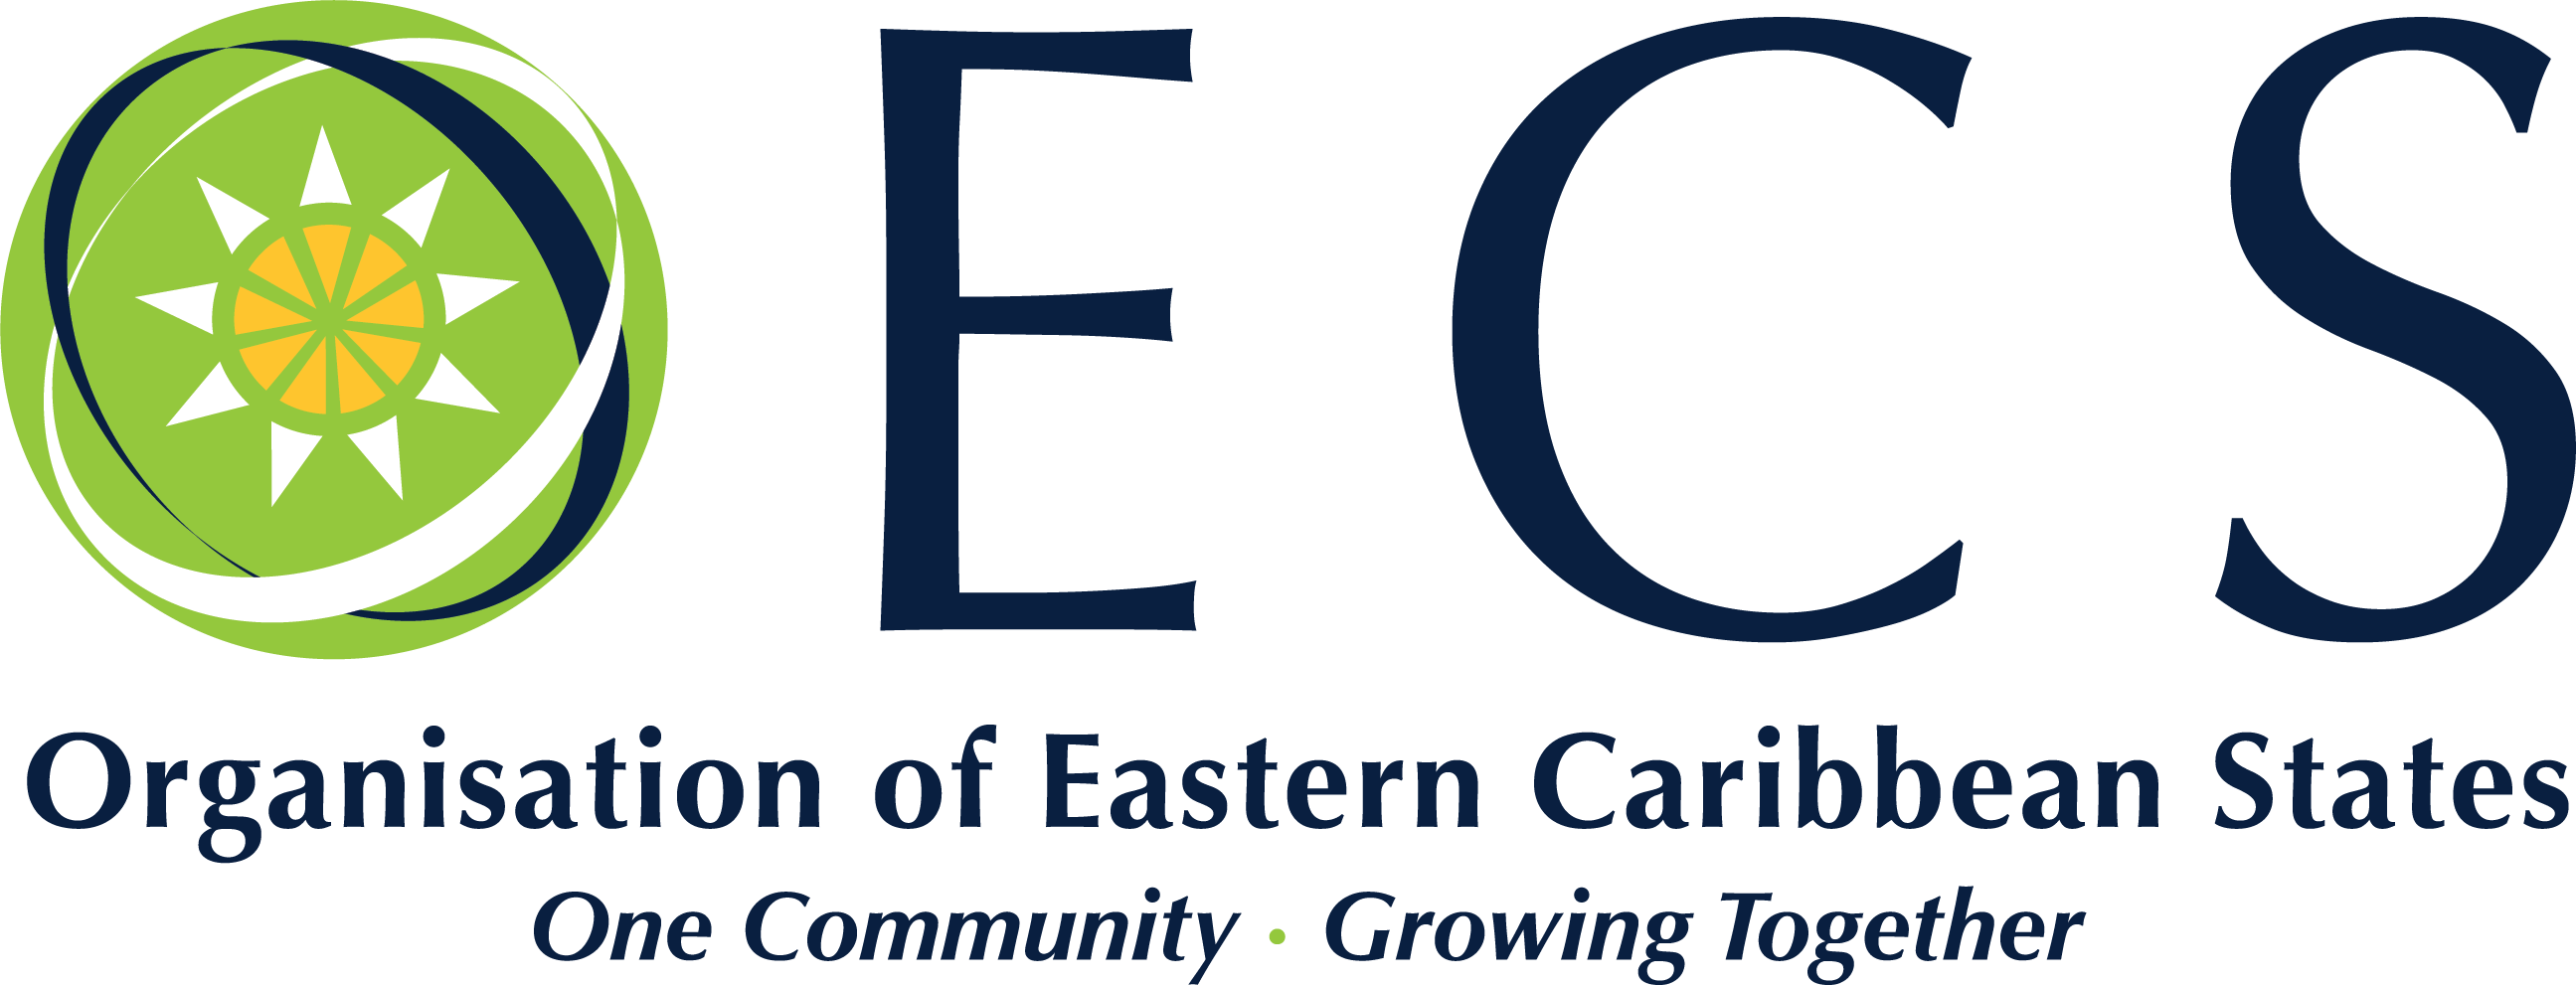 OECS Portrait Tagline Logo.png